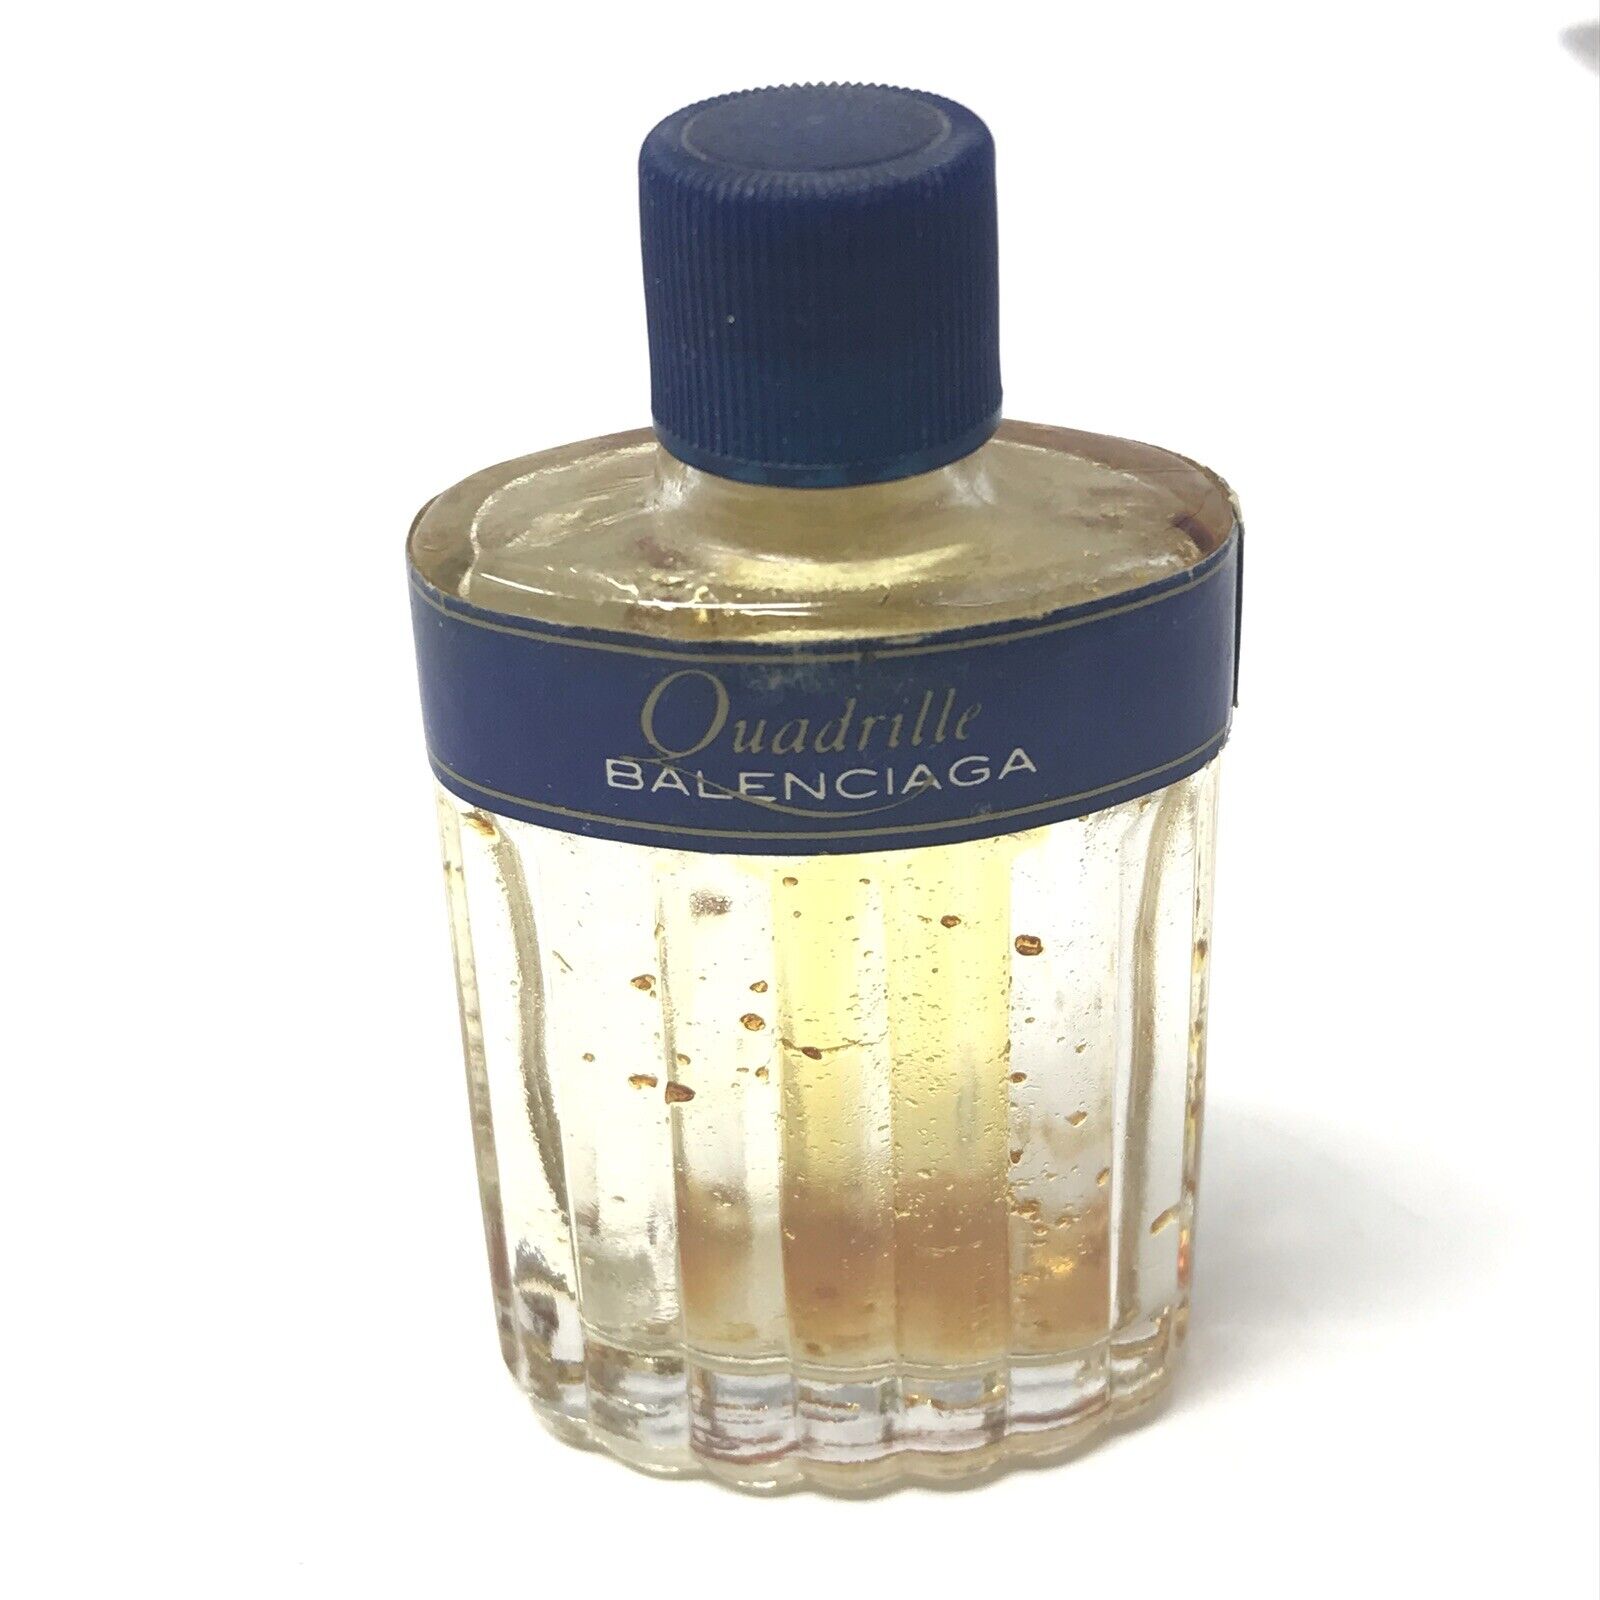 Vintage Balenciaga Quadrille Perfume EMPTY Bottle Rare Blue Label Miniature Size